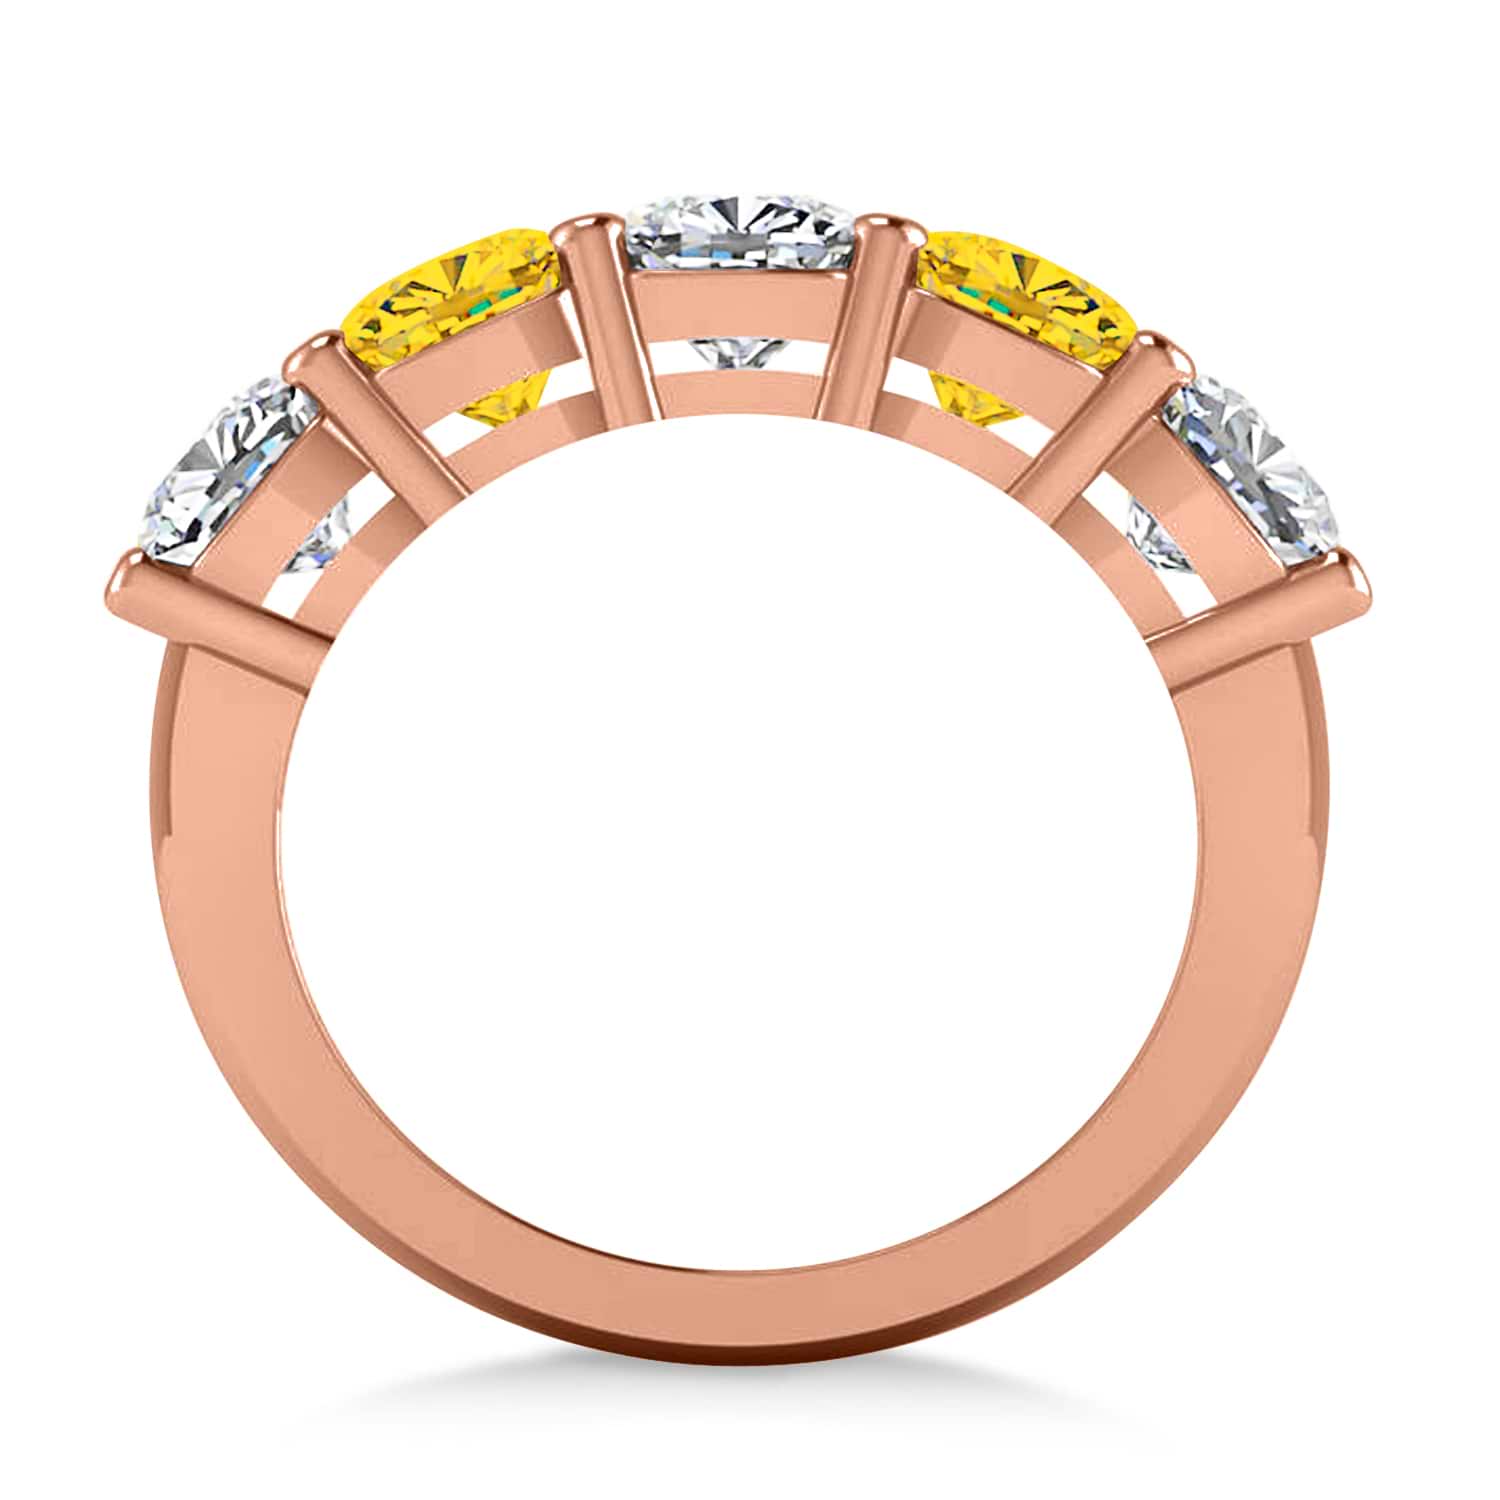 Cushion Diamond & Yellow Sapphire Five Stone Ring 14k Rose Gold (4.05ct)